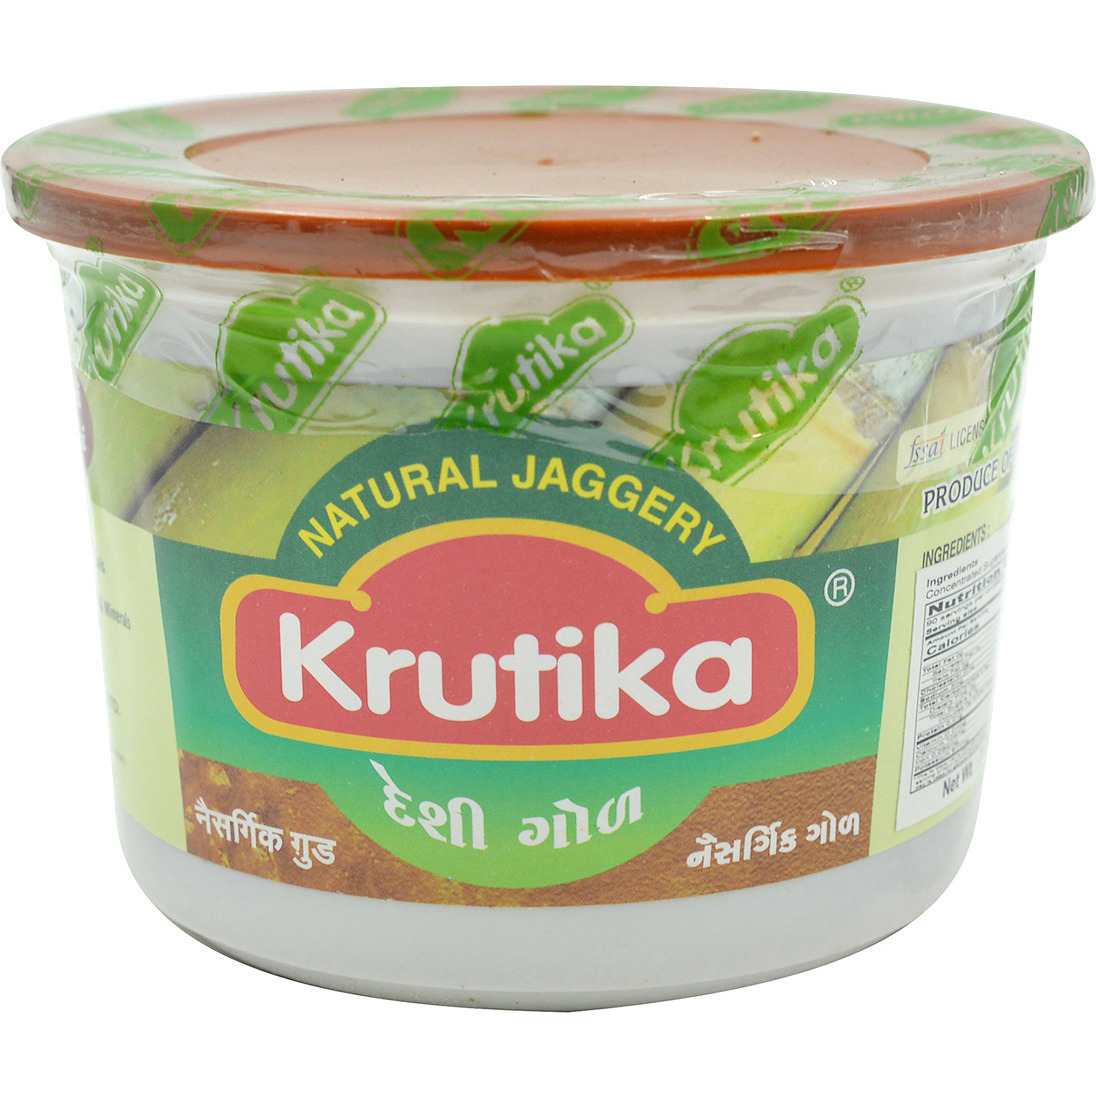 Pack of 3 - Krutika Natural Jaggery - 1 Kg (2.2 Lb)